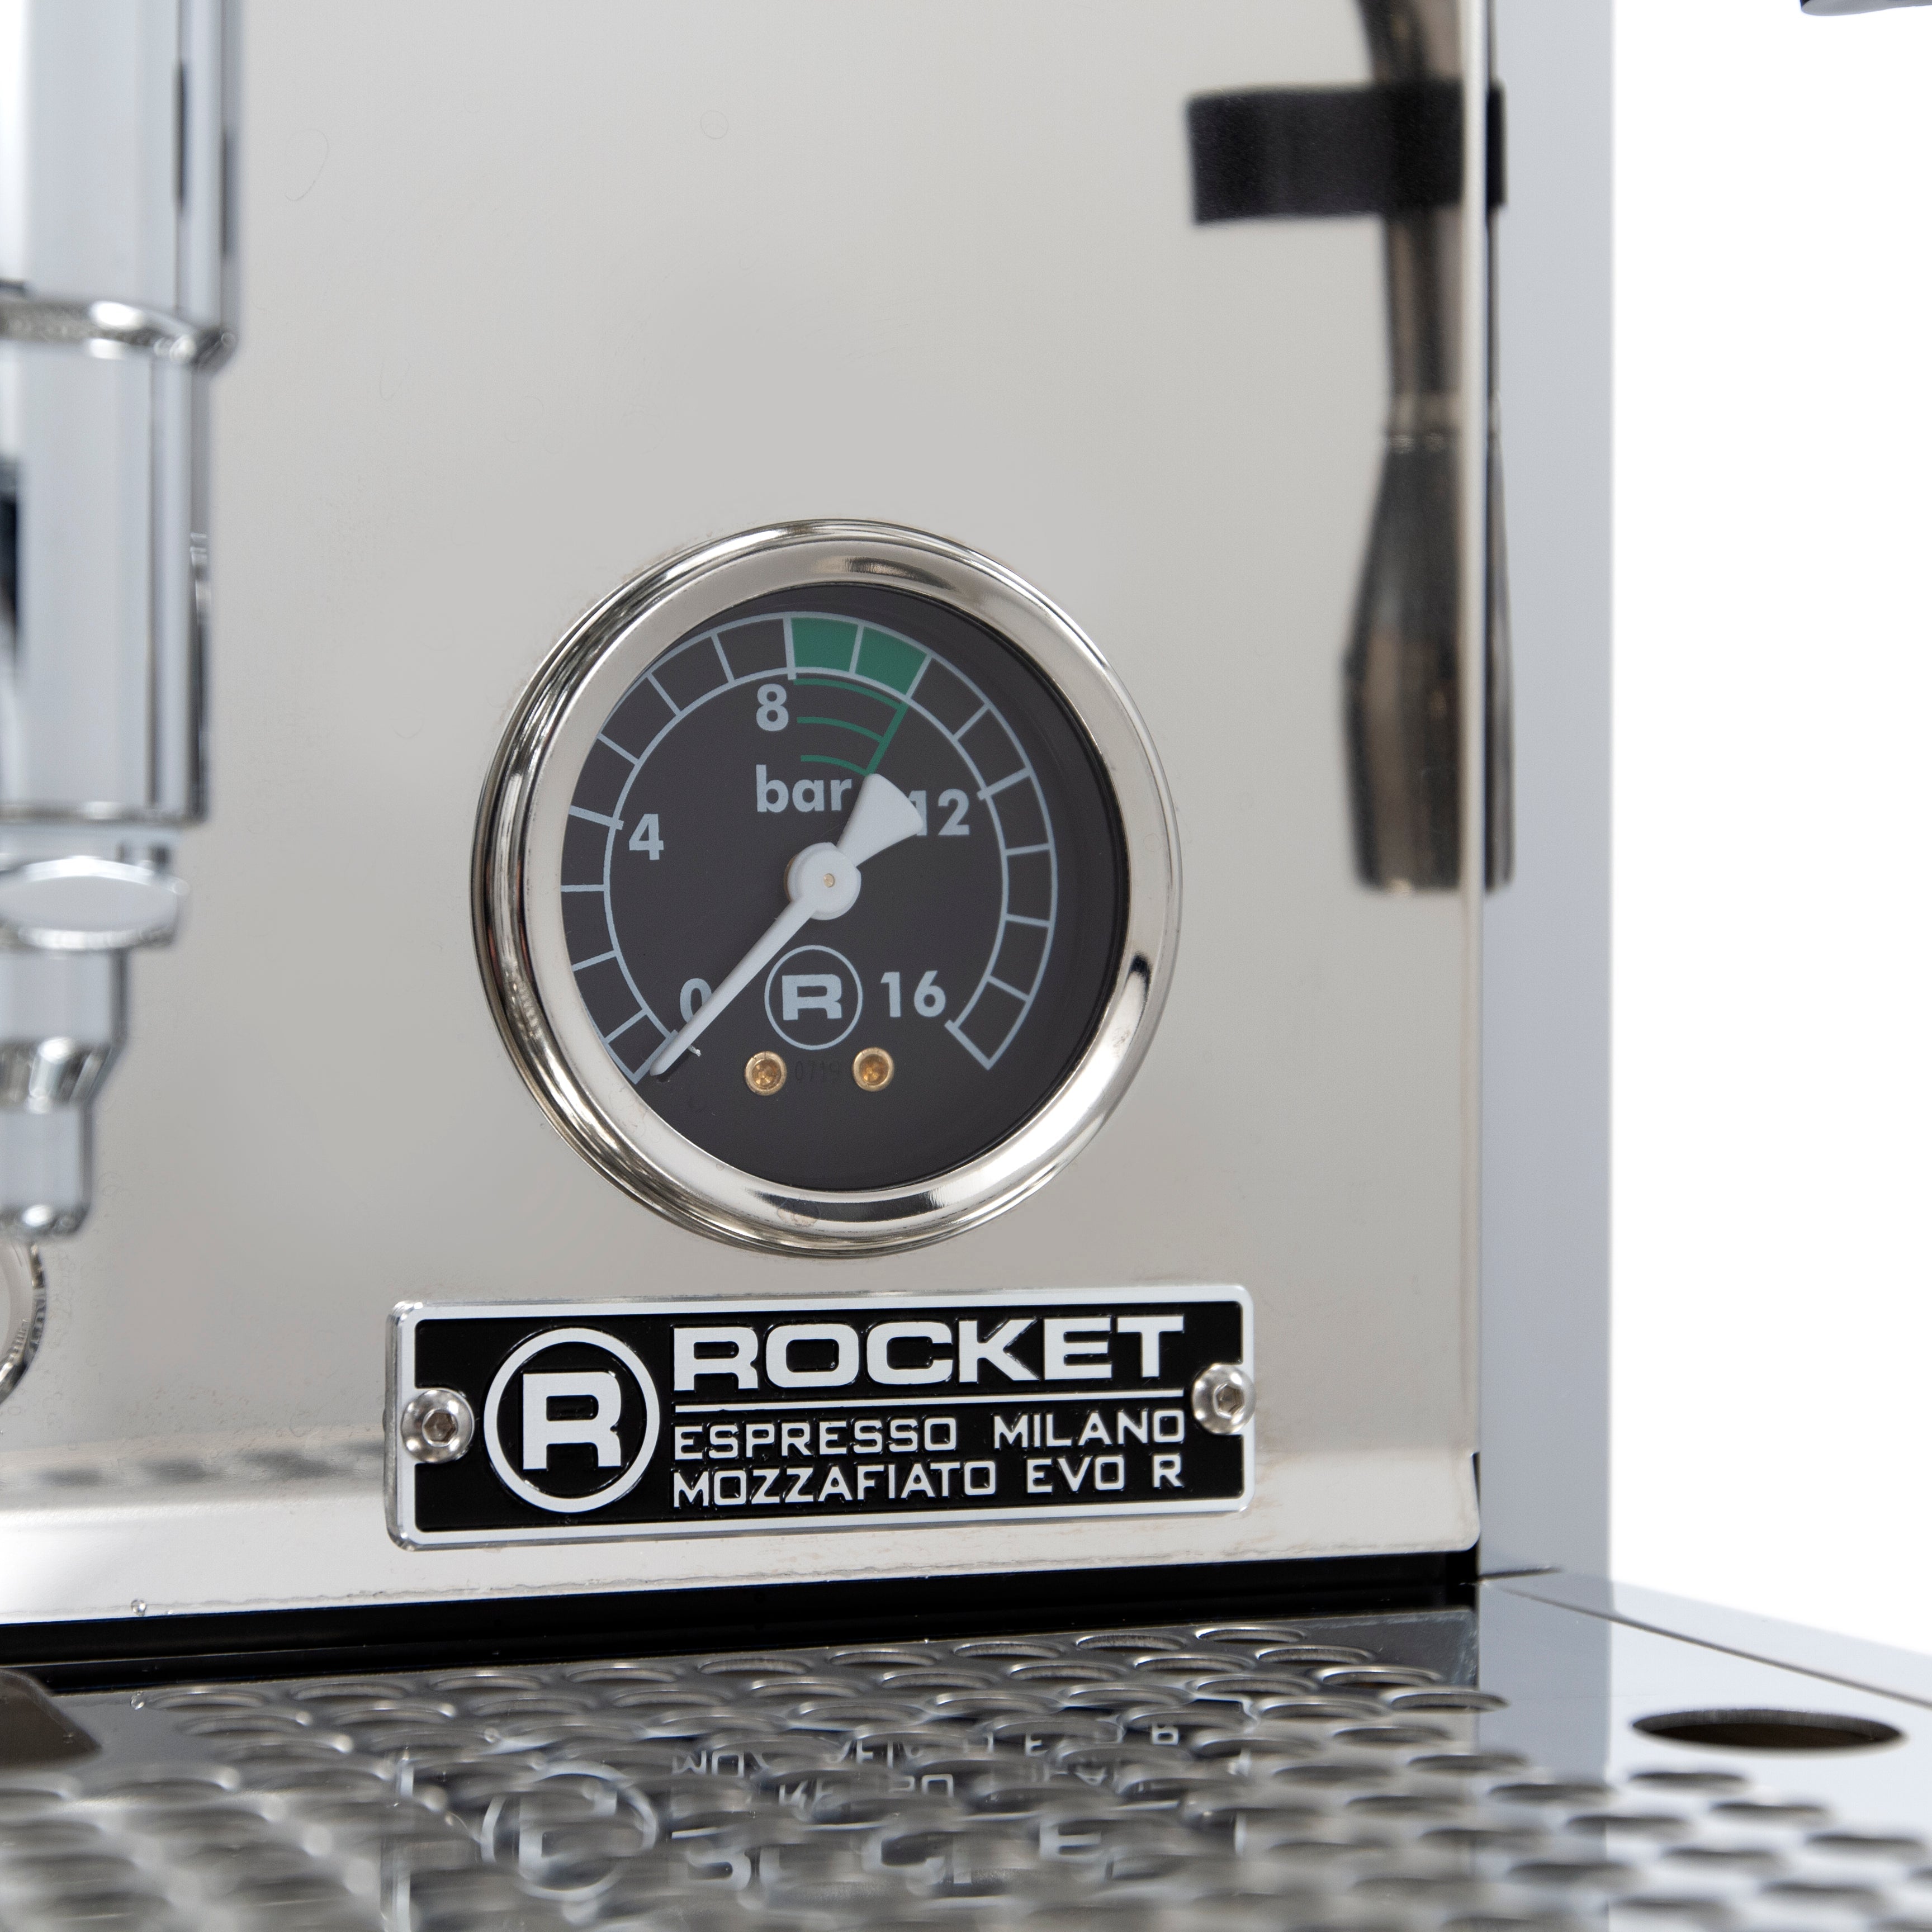 Rocket Espresso Mozzafiato Cronometro R Espresso Machine With Flow 